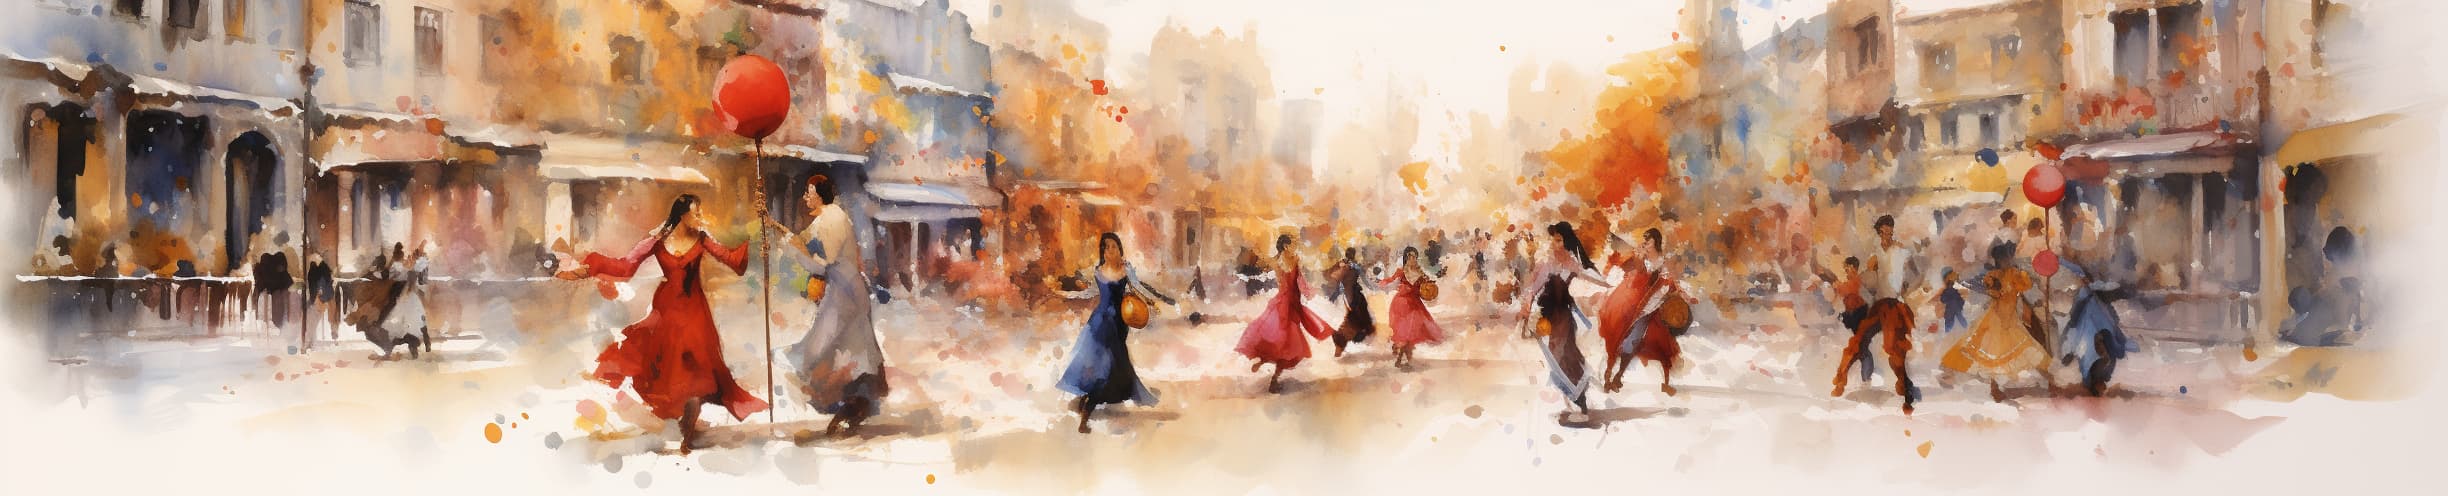 Interpretive Watercolor of People Dancing